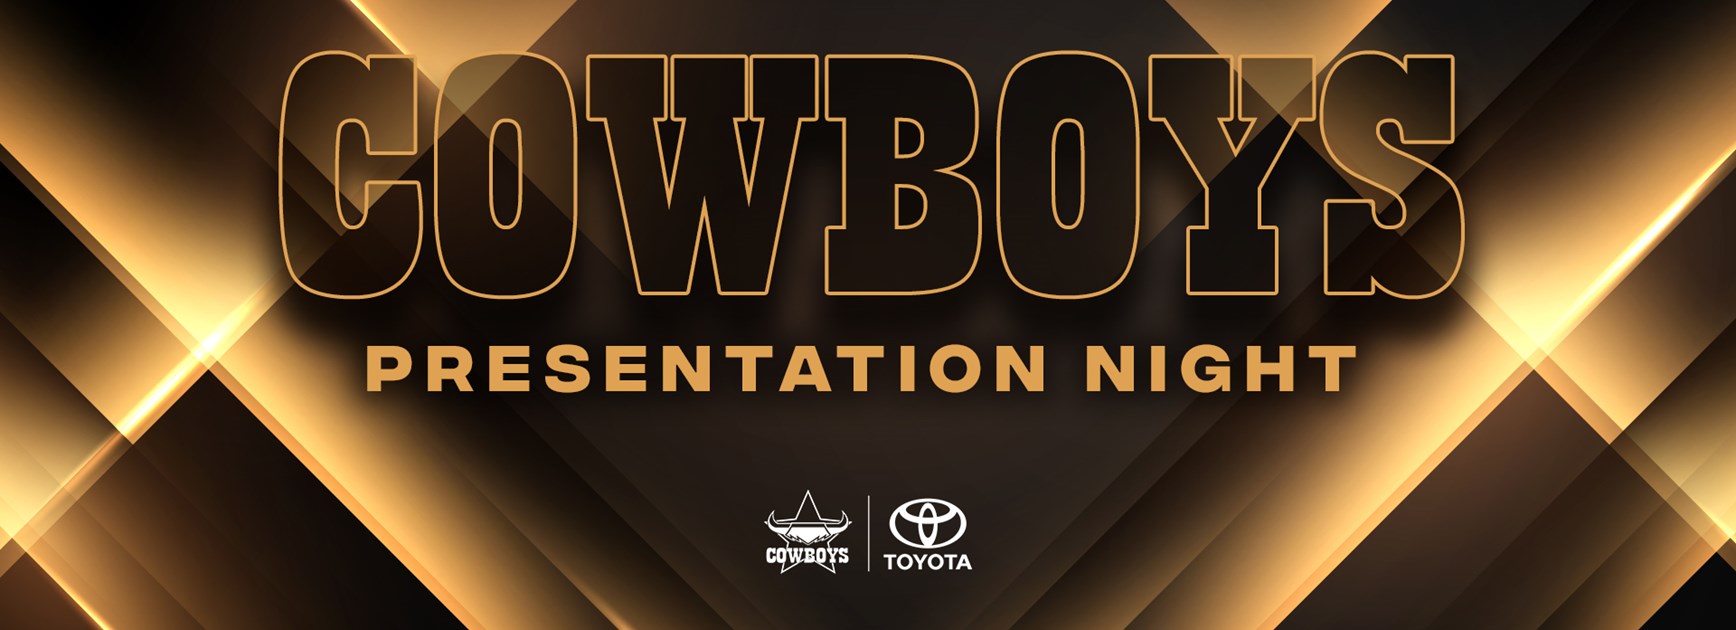 Live updates: Cowboys 2022 Presentation Night